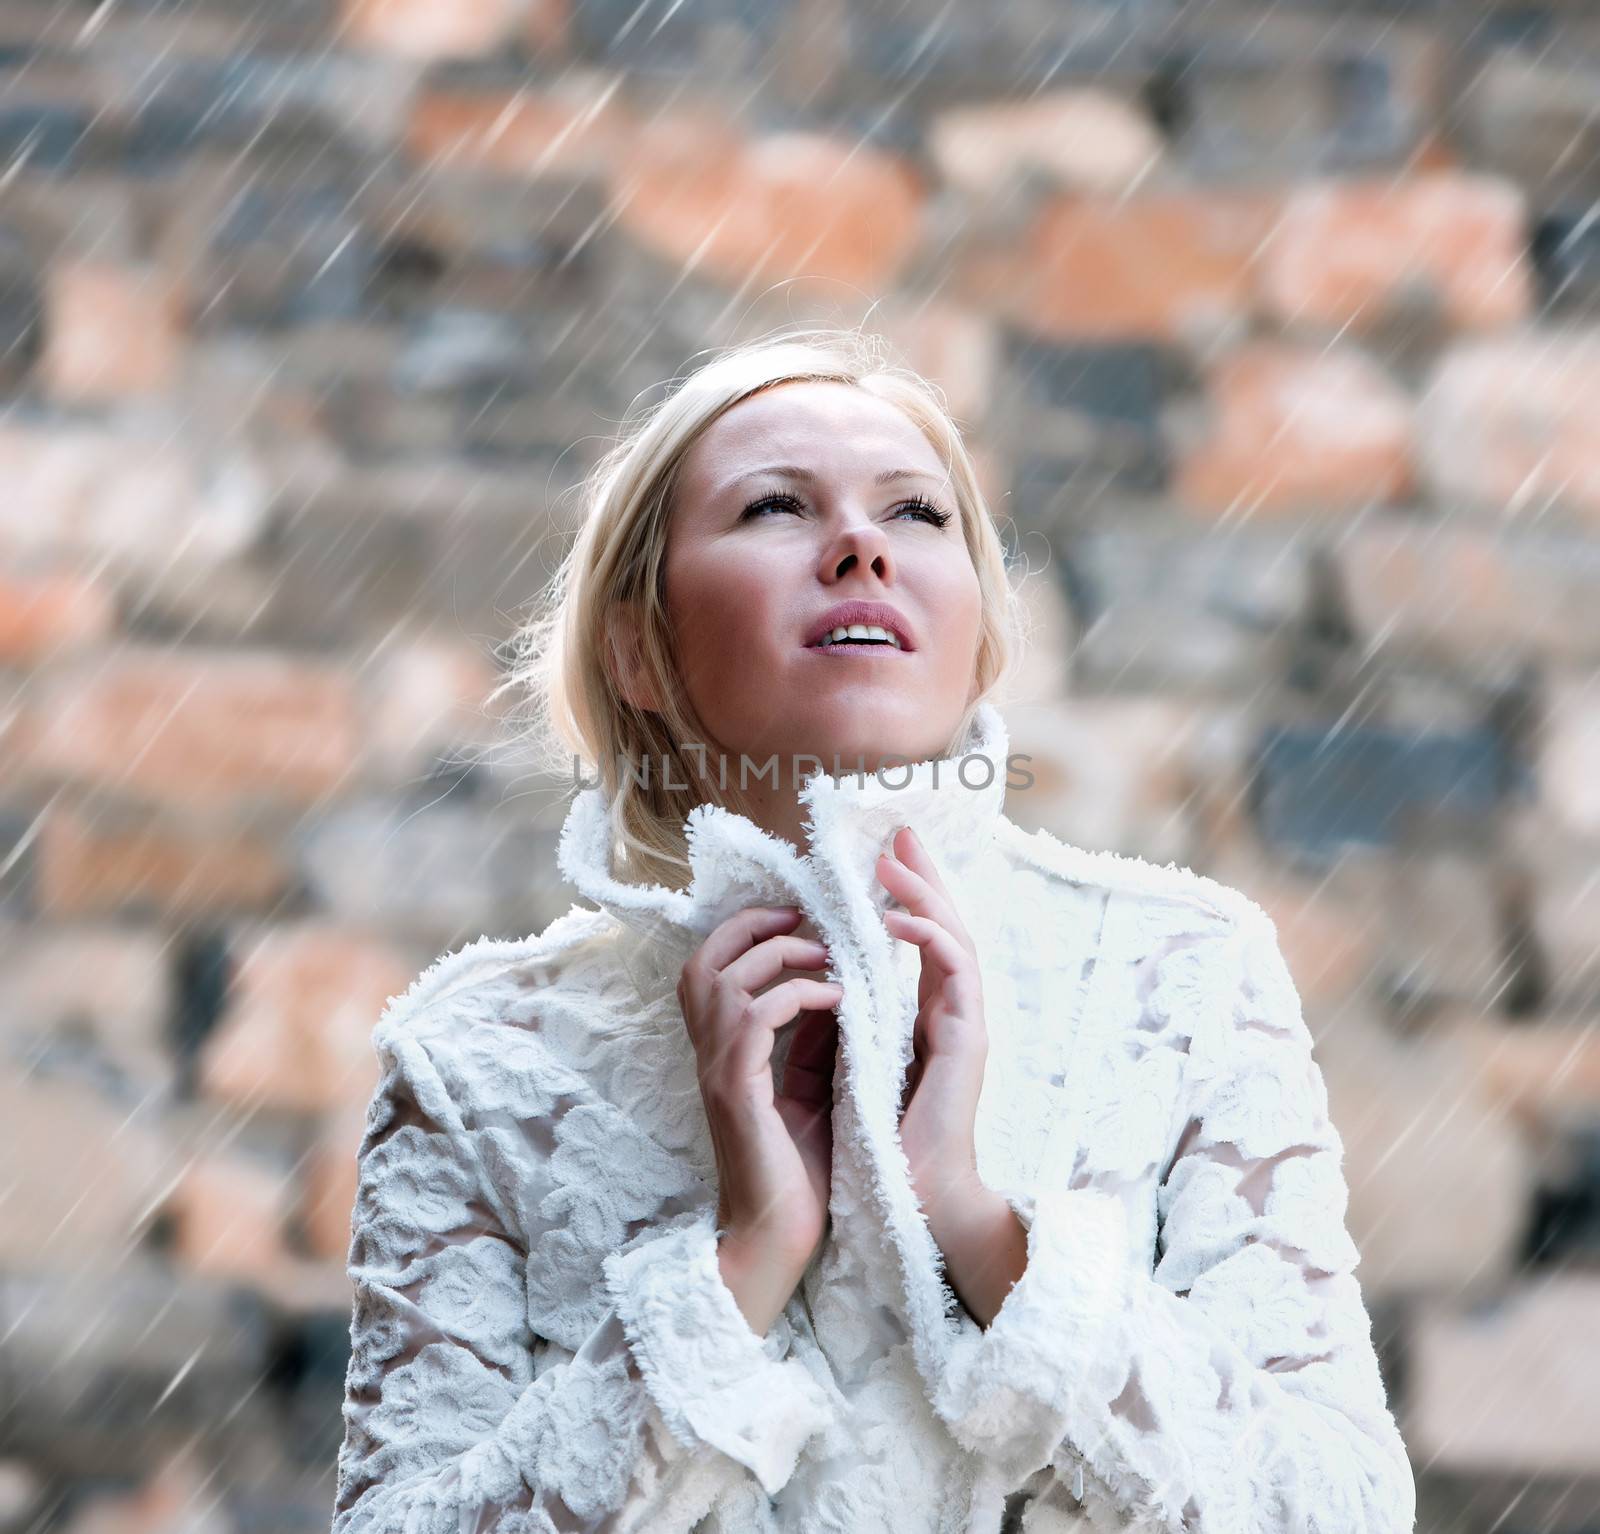 elegant woman under rain by vladimir_sklyarov